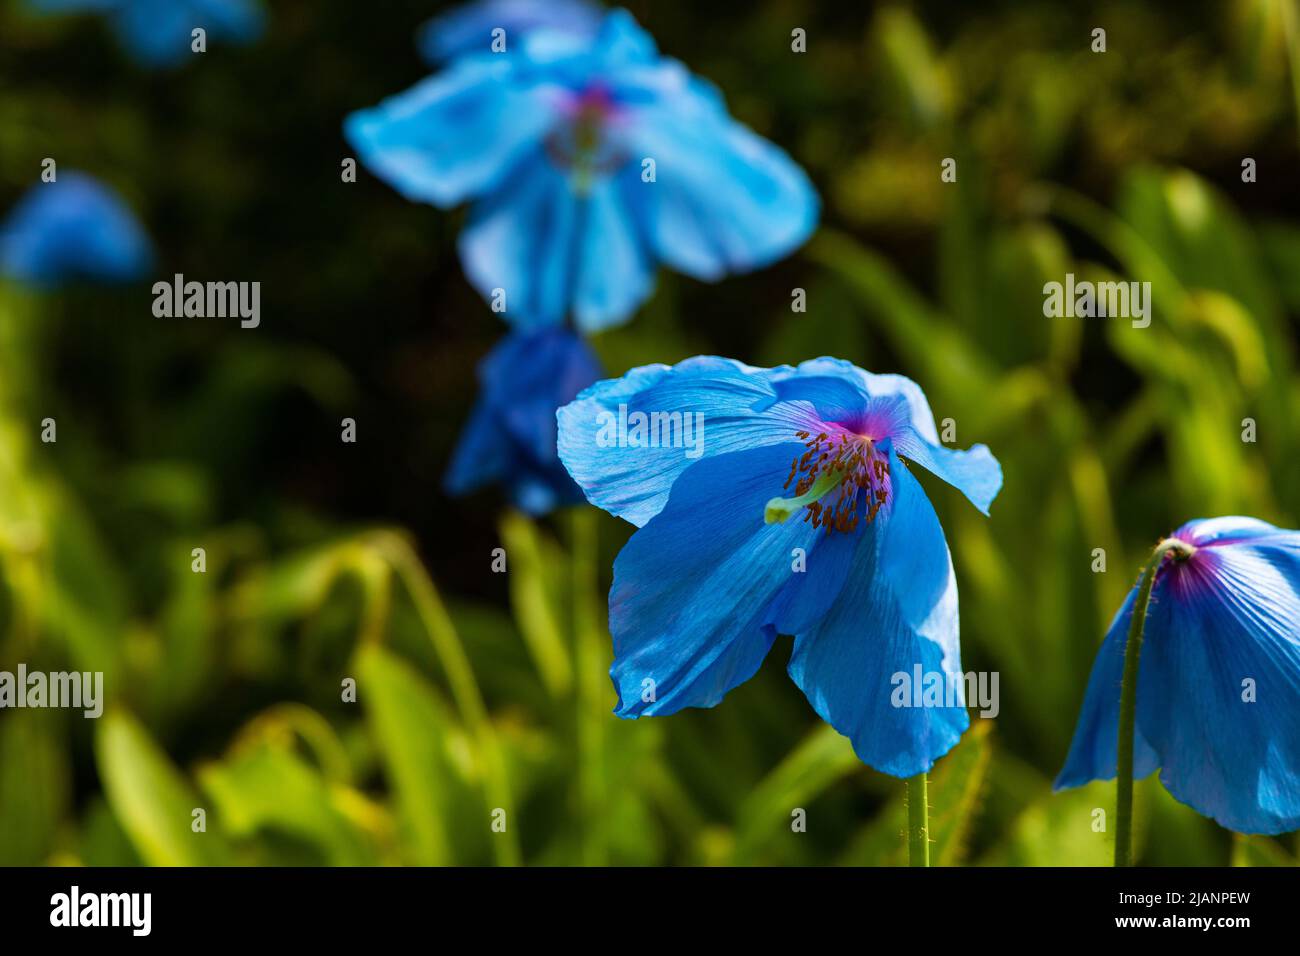 blue himalayan poppy flowers Stock Photo